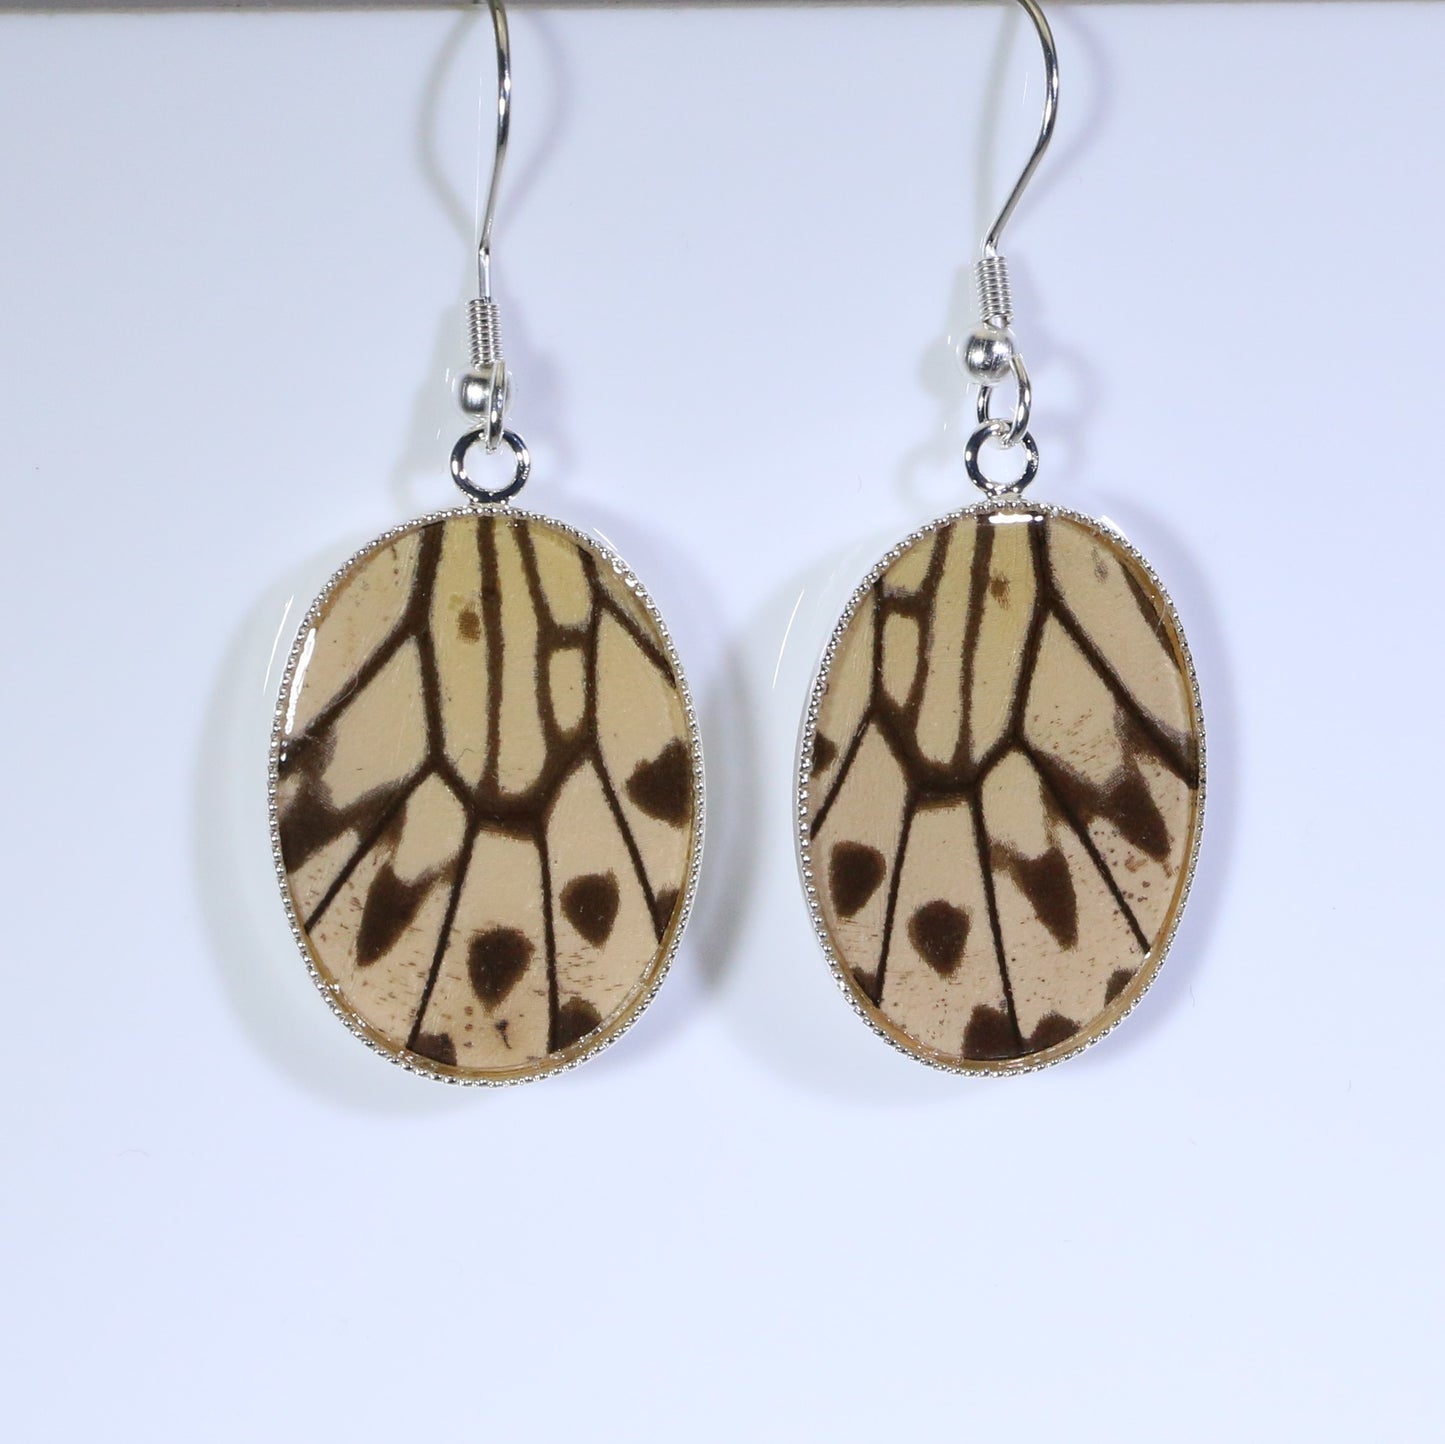 51209 - Real Butterfly Wing Jewelry - Earrings - Medium - Paper Kite